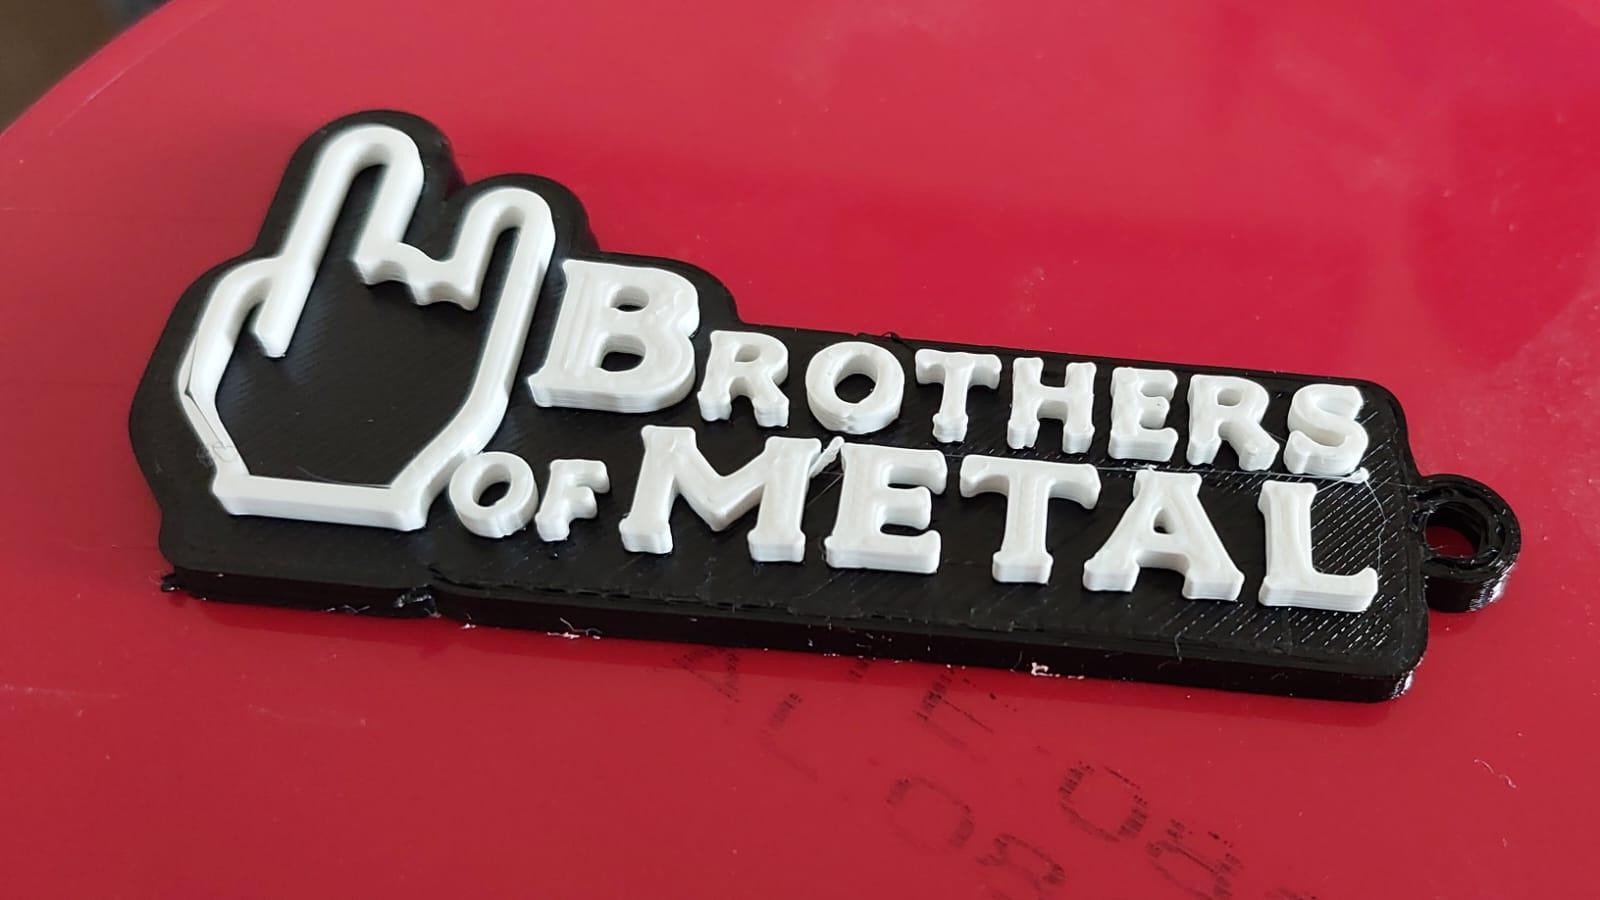 Brothers of Metal.stl 3d model